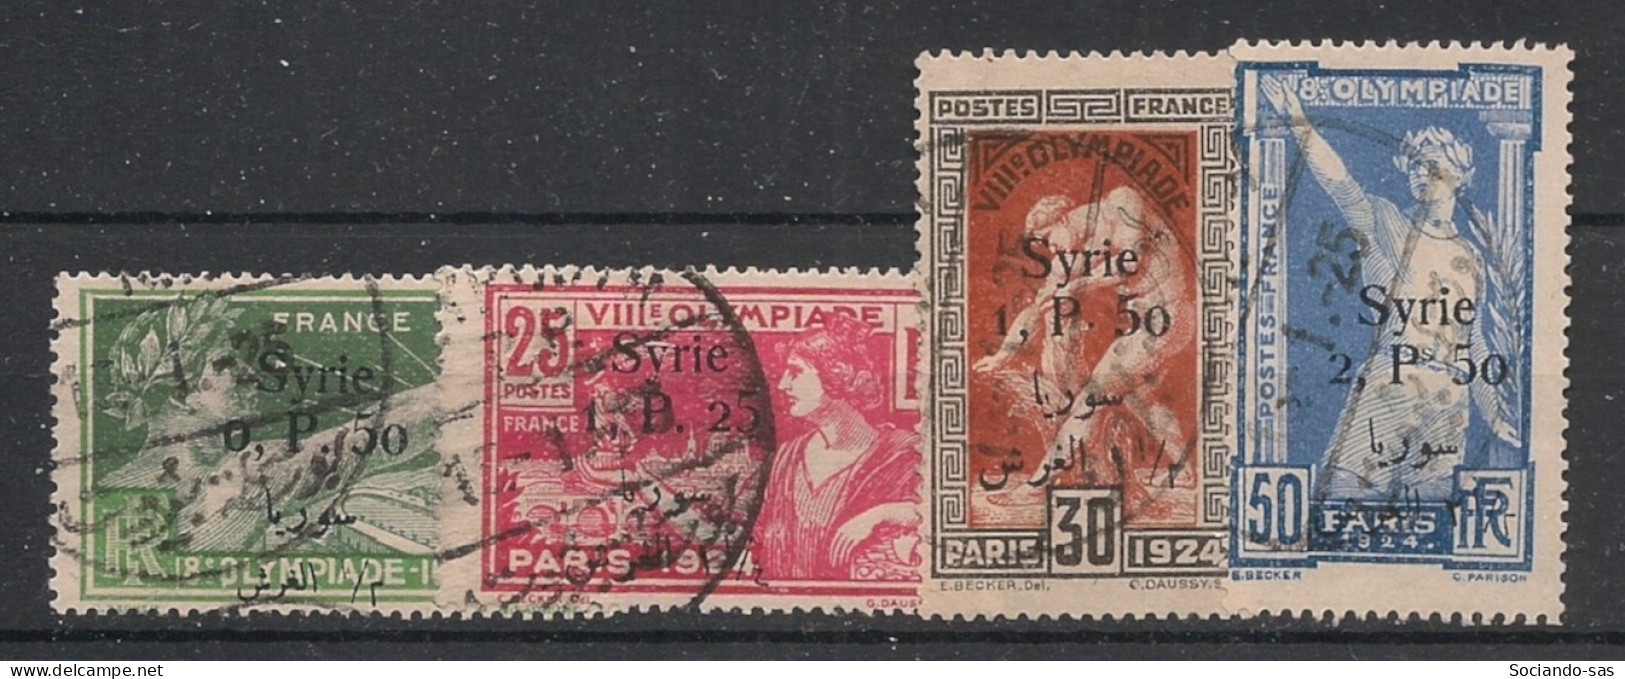 SYRIE - 1924 - N°YT. 149 à 152 - Olympics - Série Complète - Oblitéré / Used - Used Stamps